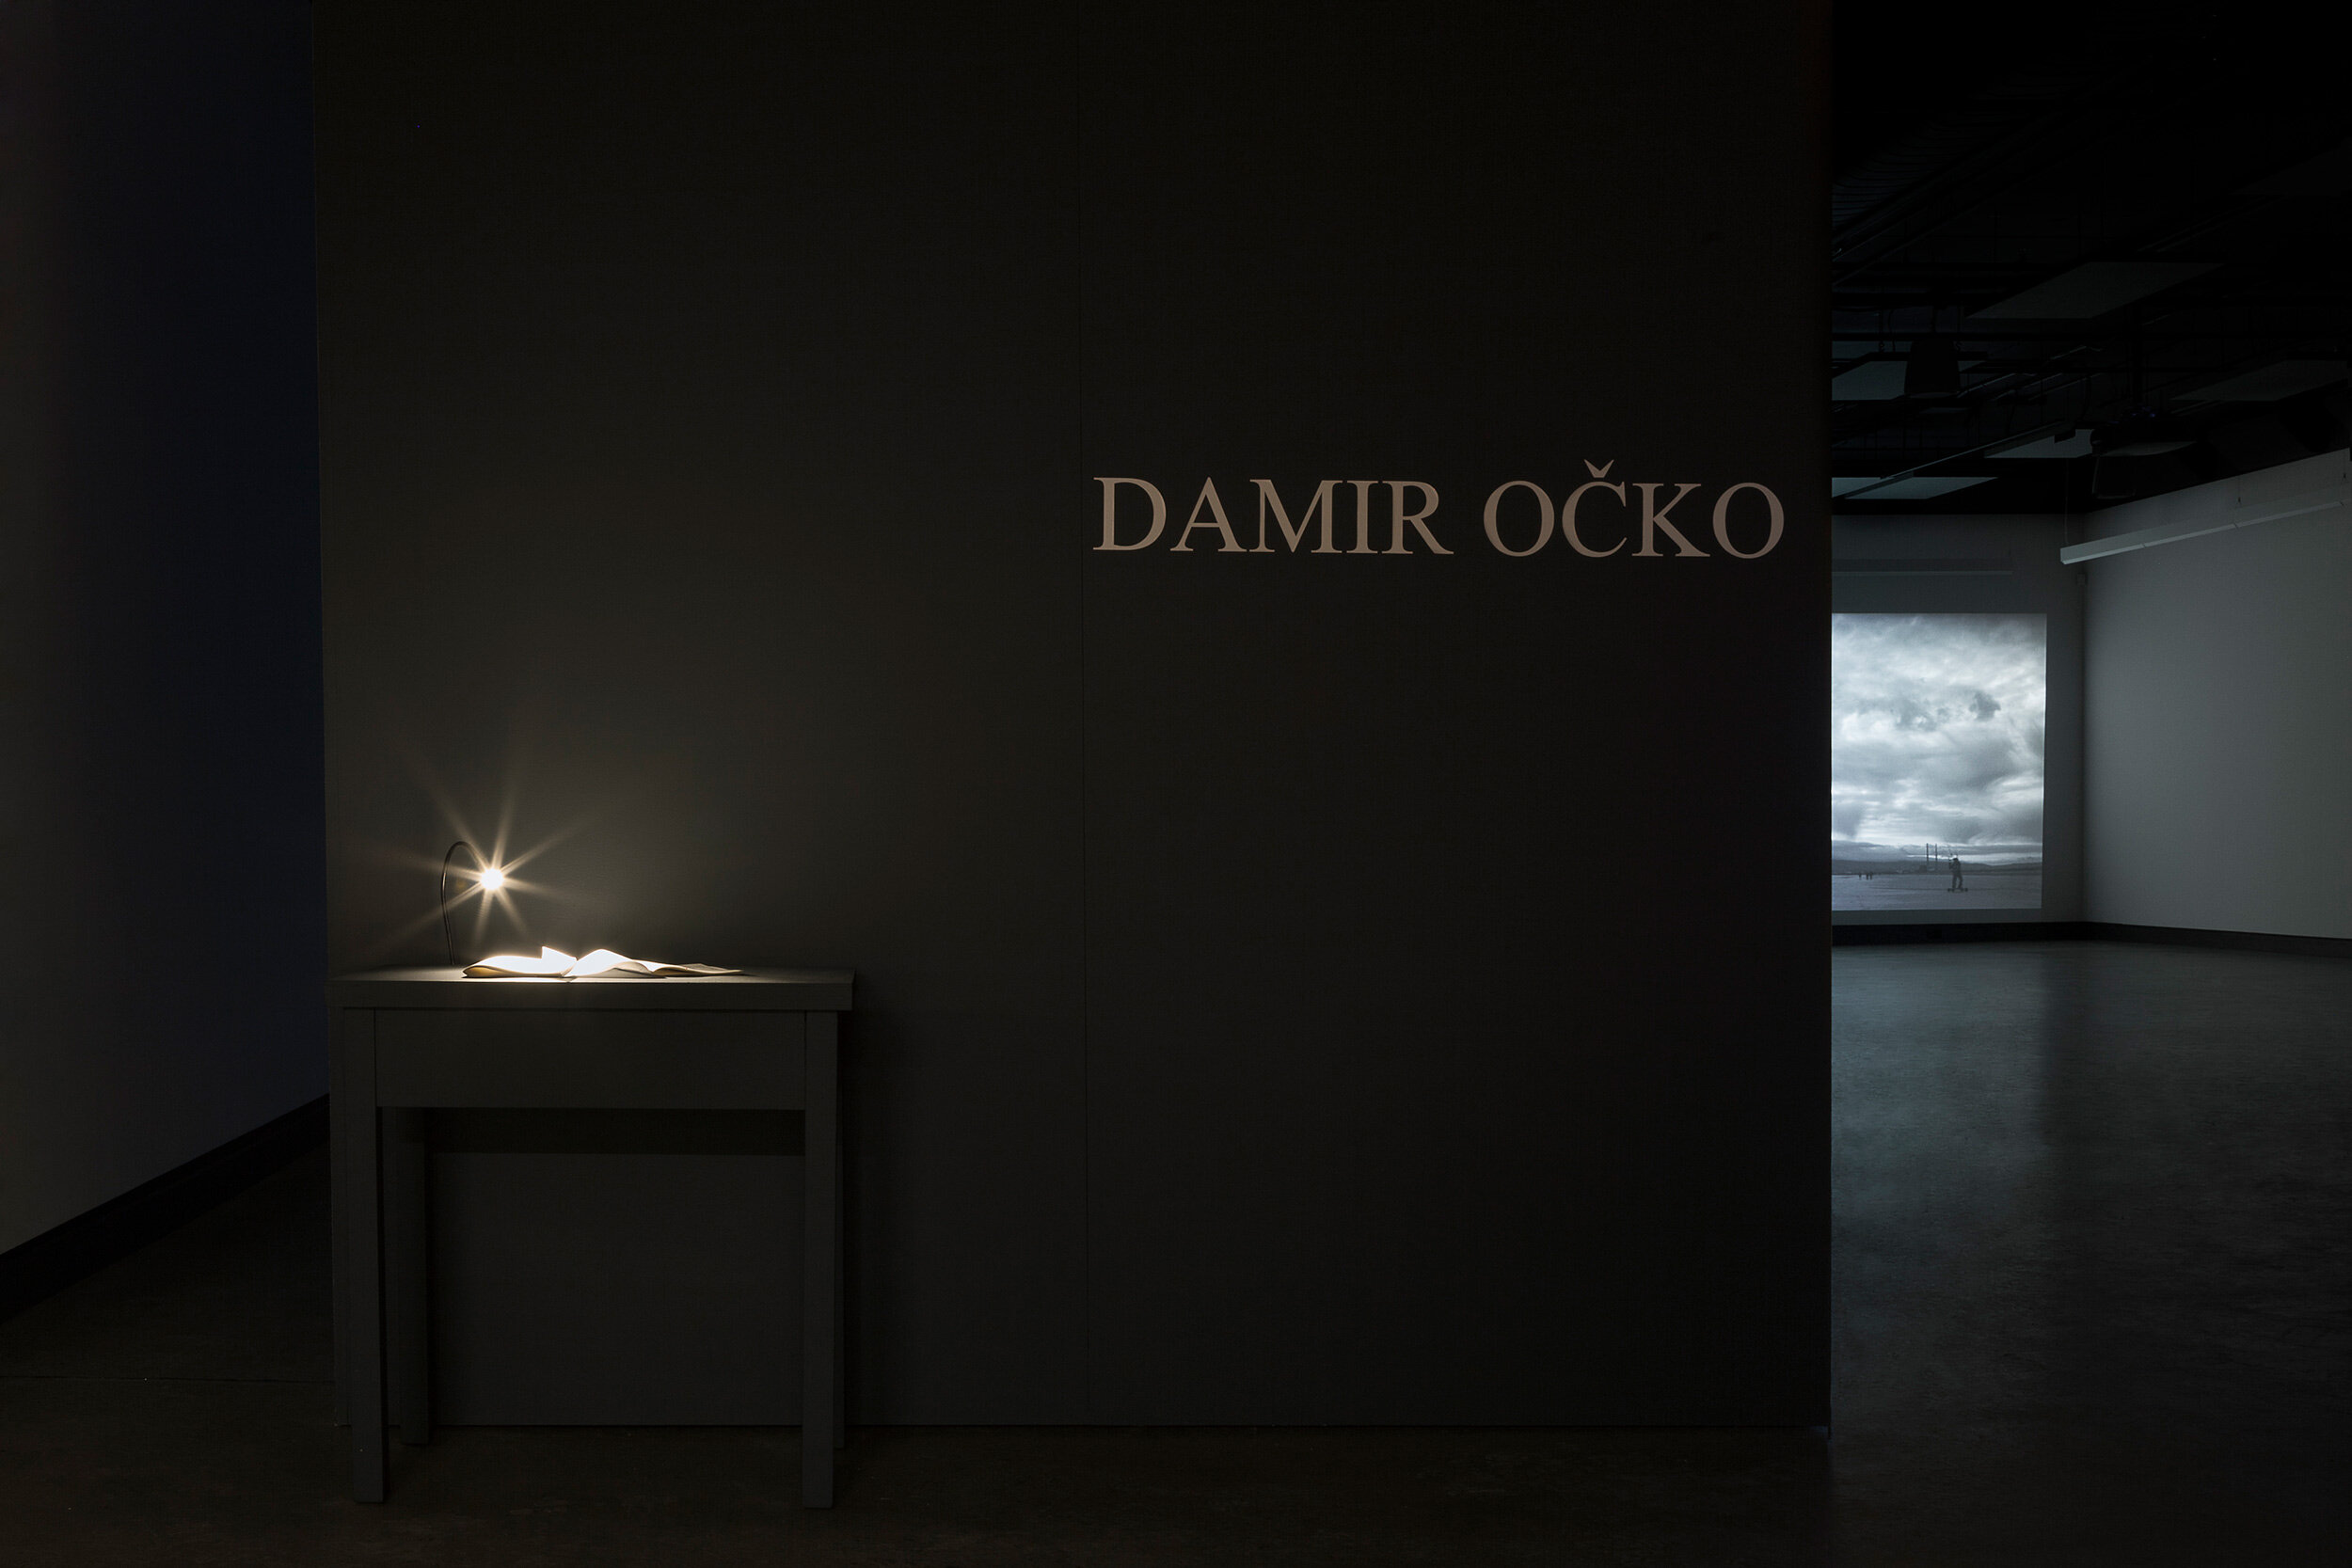  © Damir Očko, installation view of the exhibition, Dazibao, 2016. Photo: Marilou Crispin. 